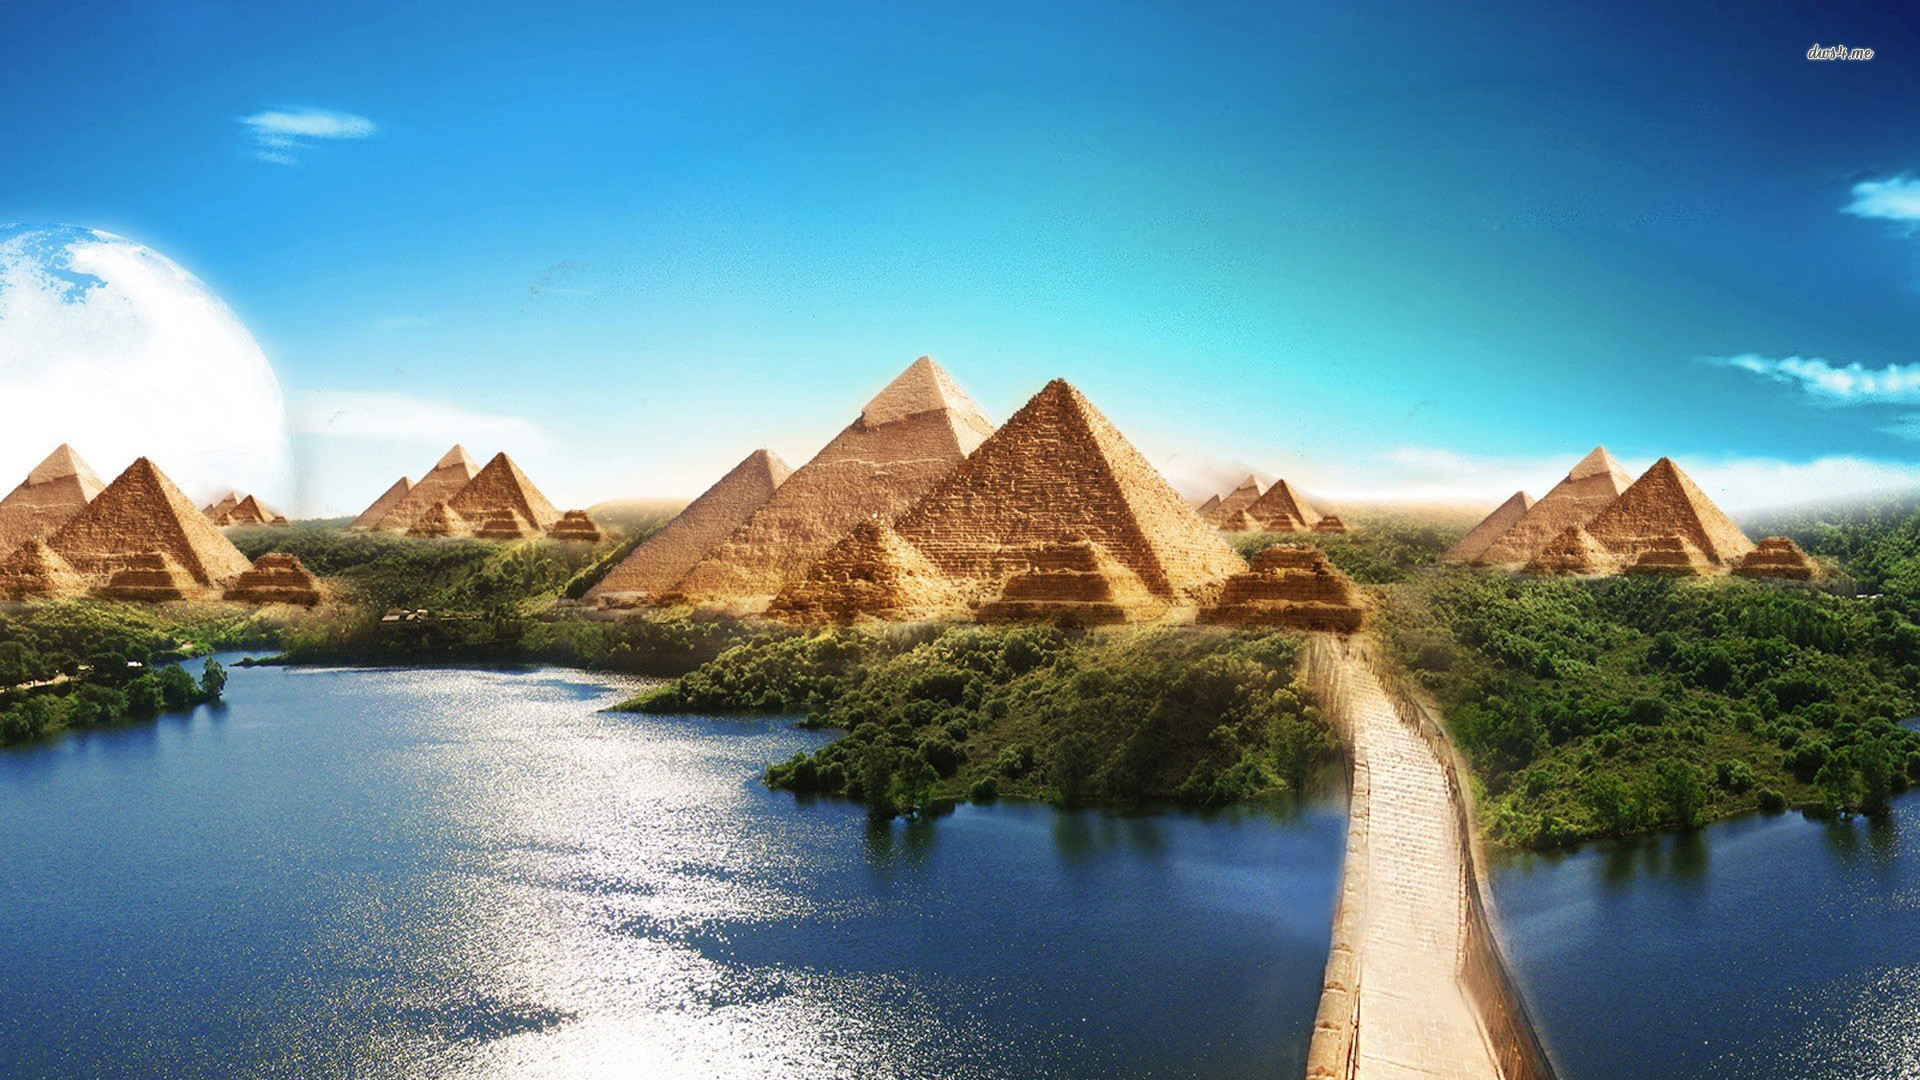 pyramids of giza wallpaper,natural landscape,nature,reflection,water resources,landmark